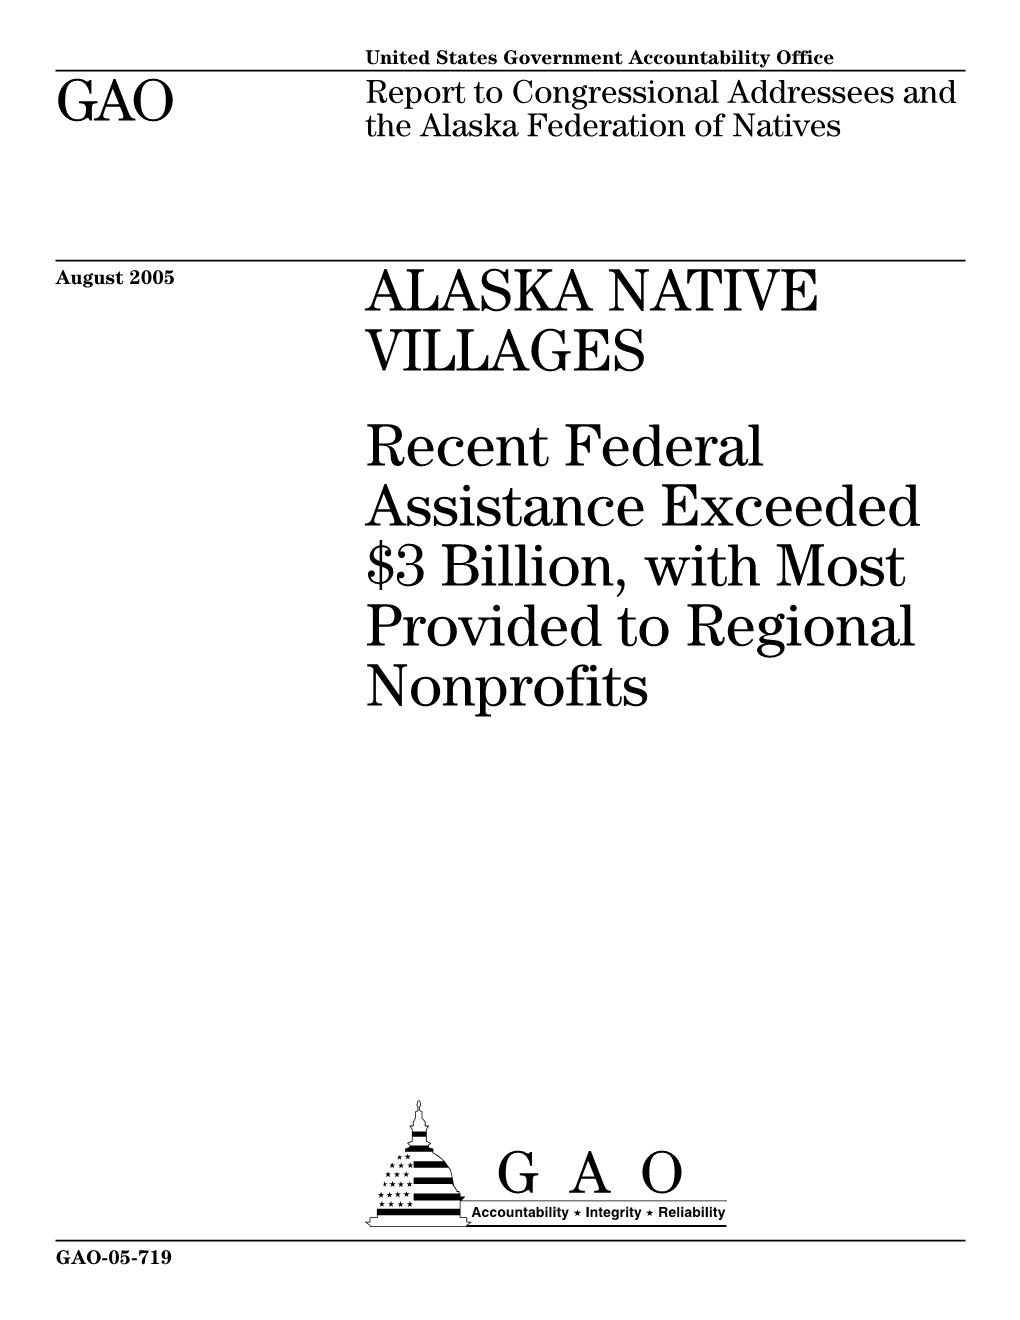 GAO-05-719 Alaska Native Villages: Recent Federal Assistance